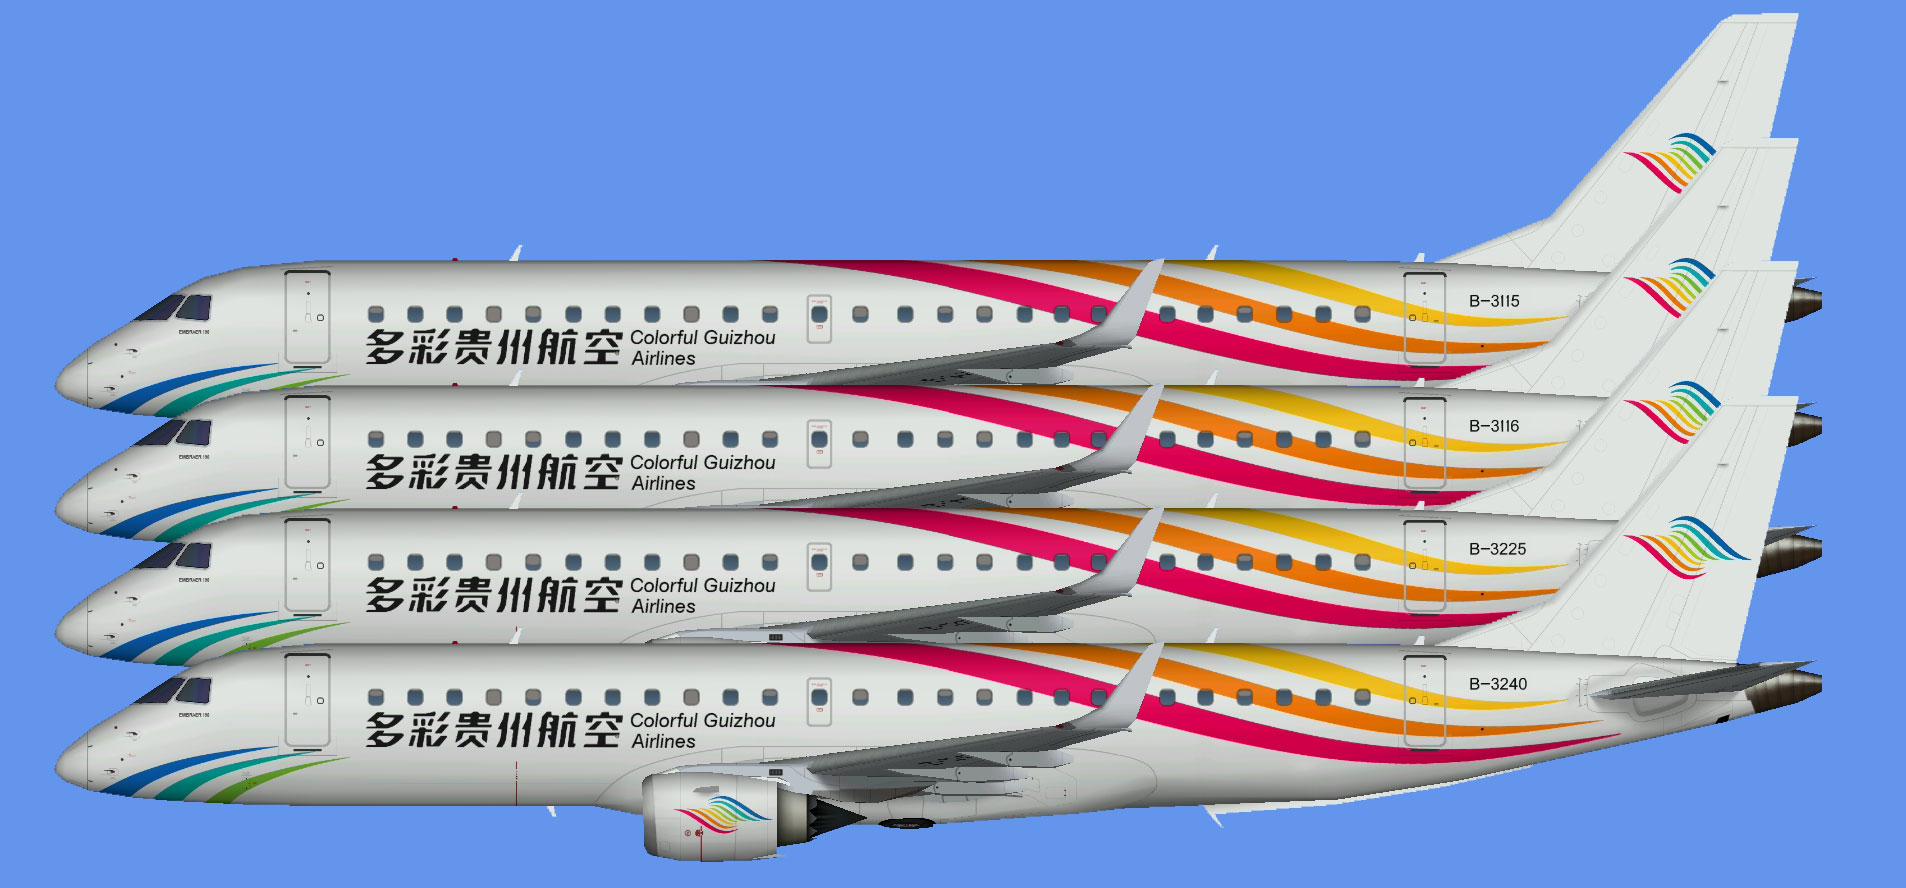 Colorful Guizhou Airlines E-190